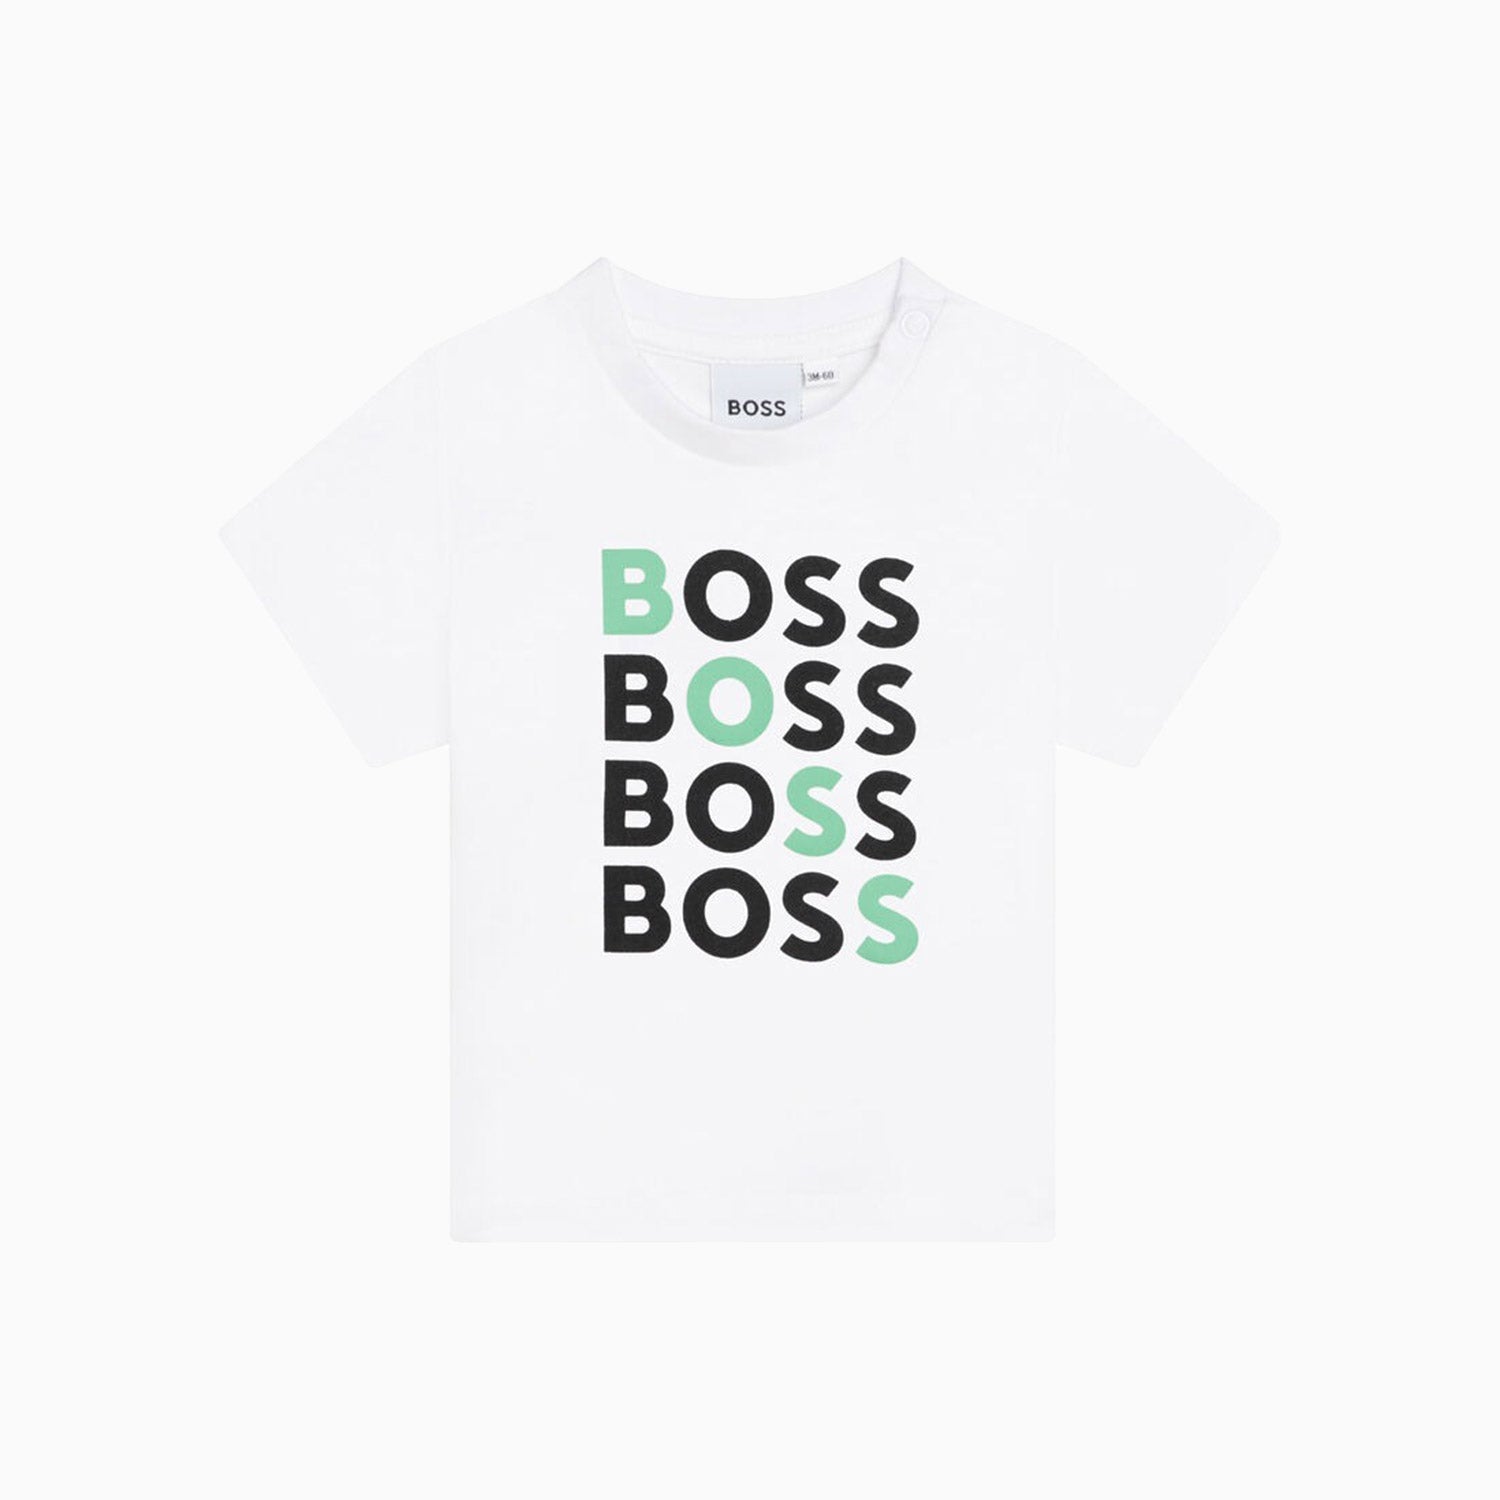 hugo-boss-kids-t-shirt-toddlers-j05920-871